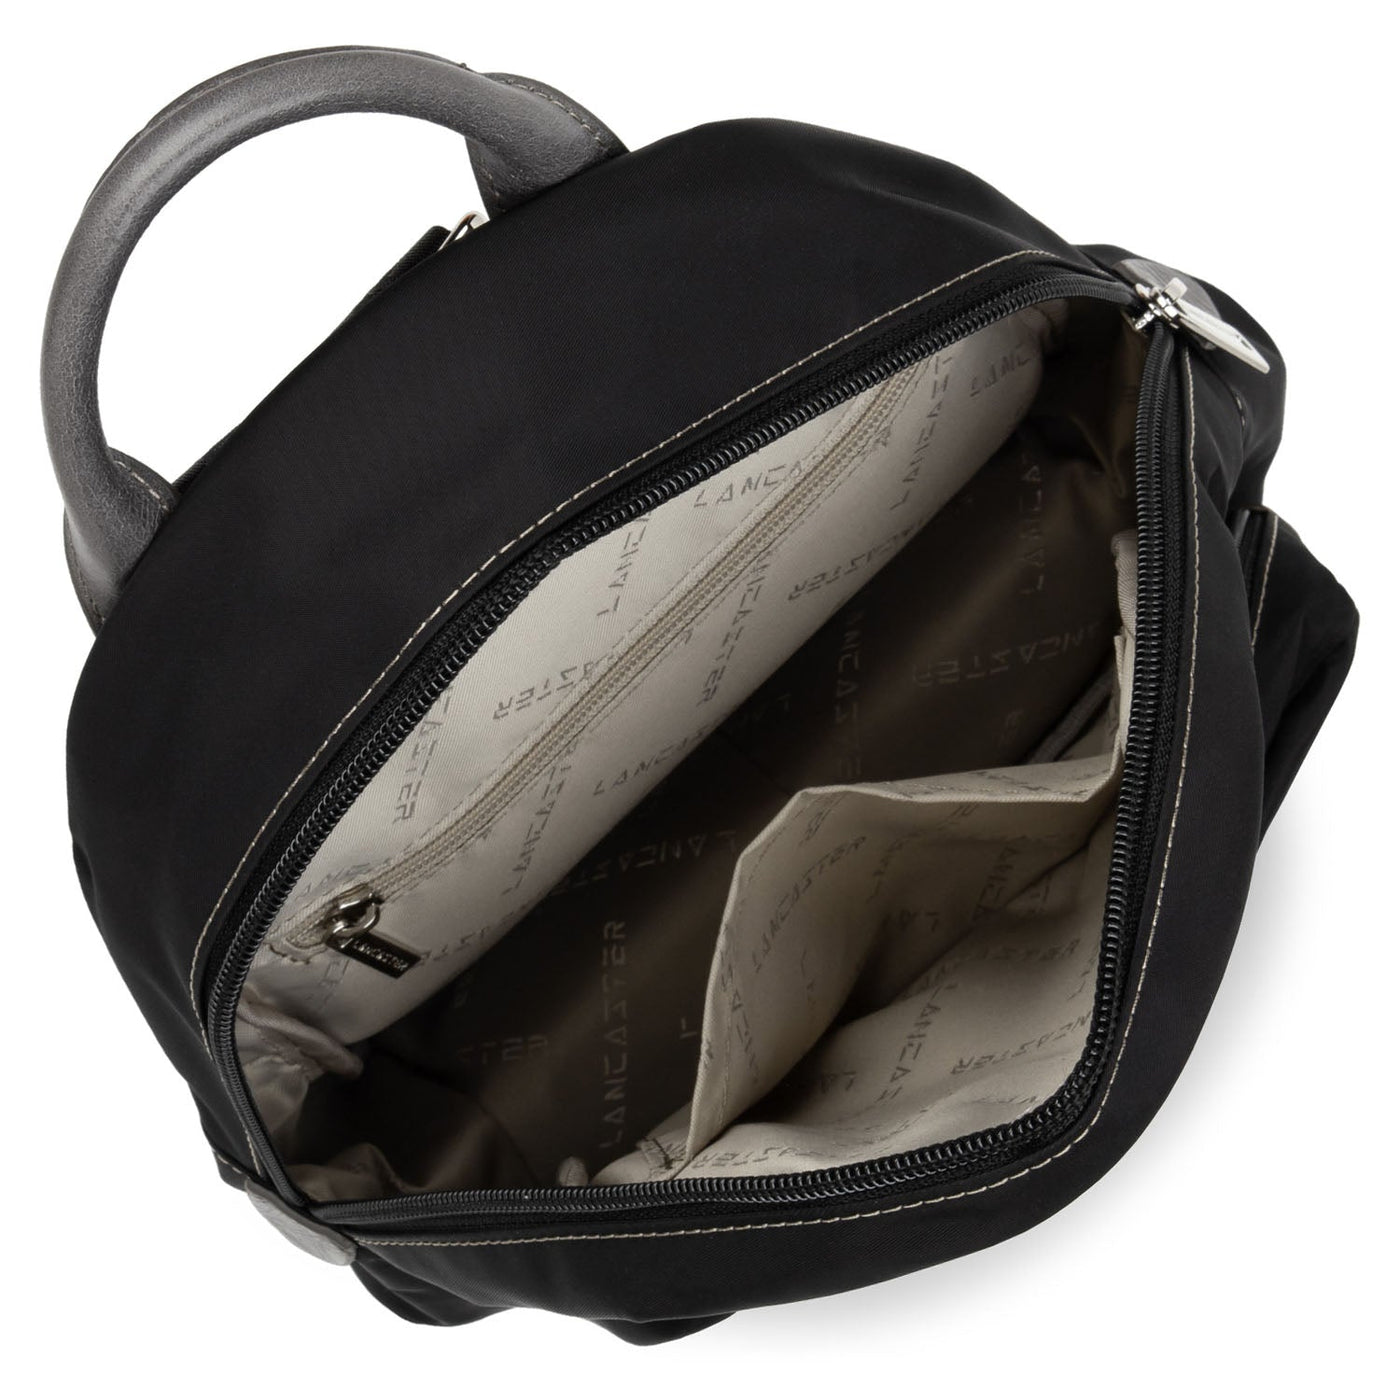 backpack - basic sport #couleur_noir-taupe-galet